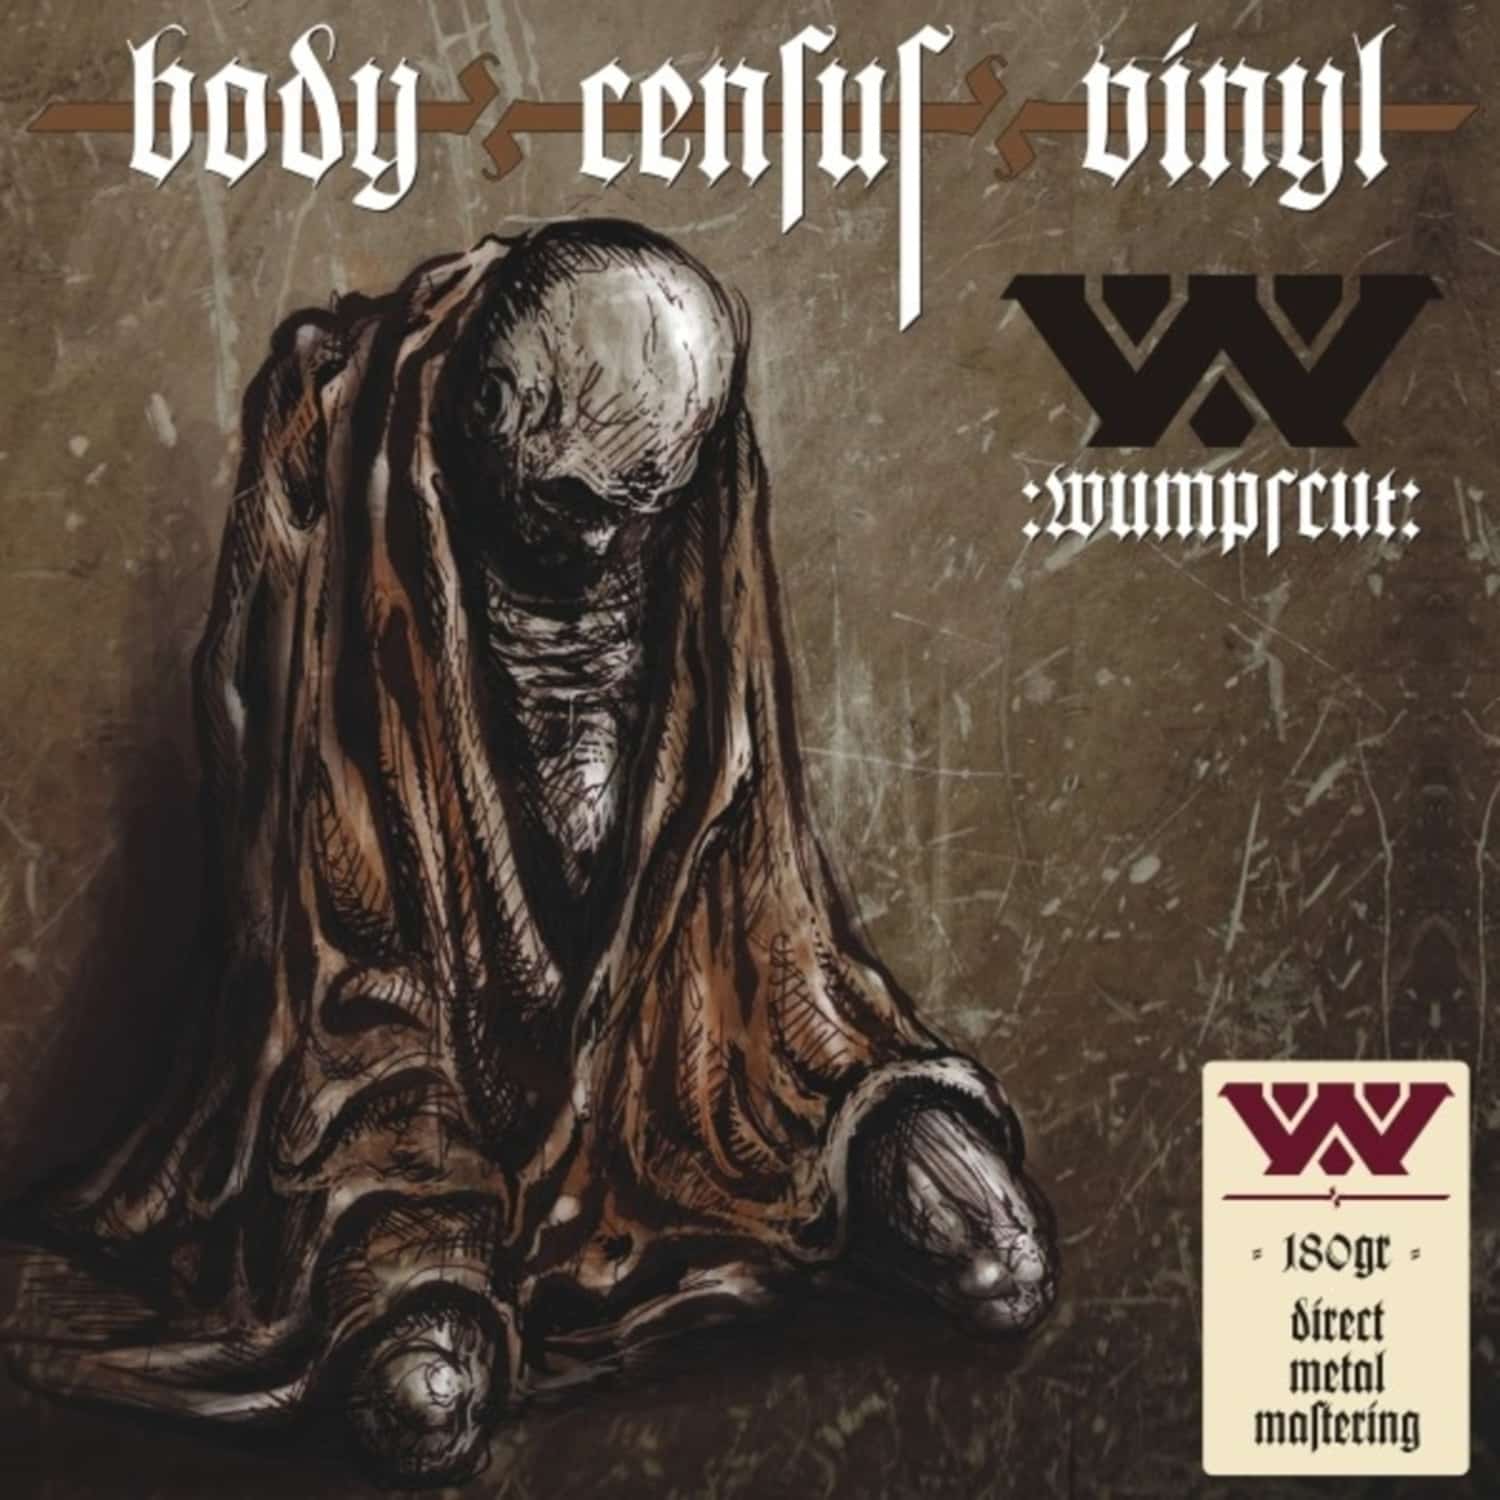 Wumpscut - BODY CENSUS 